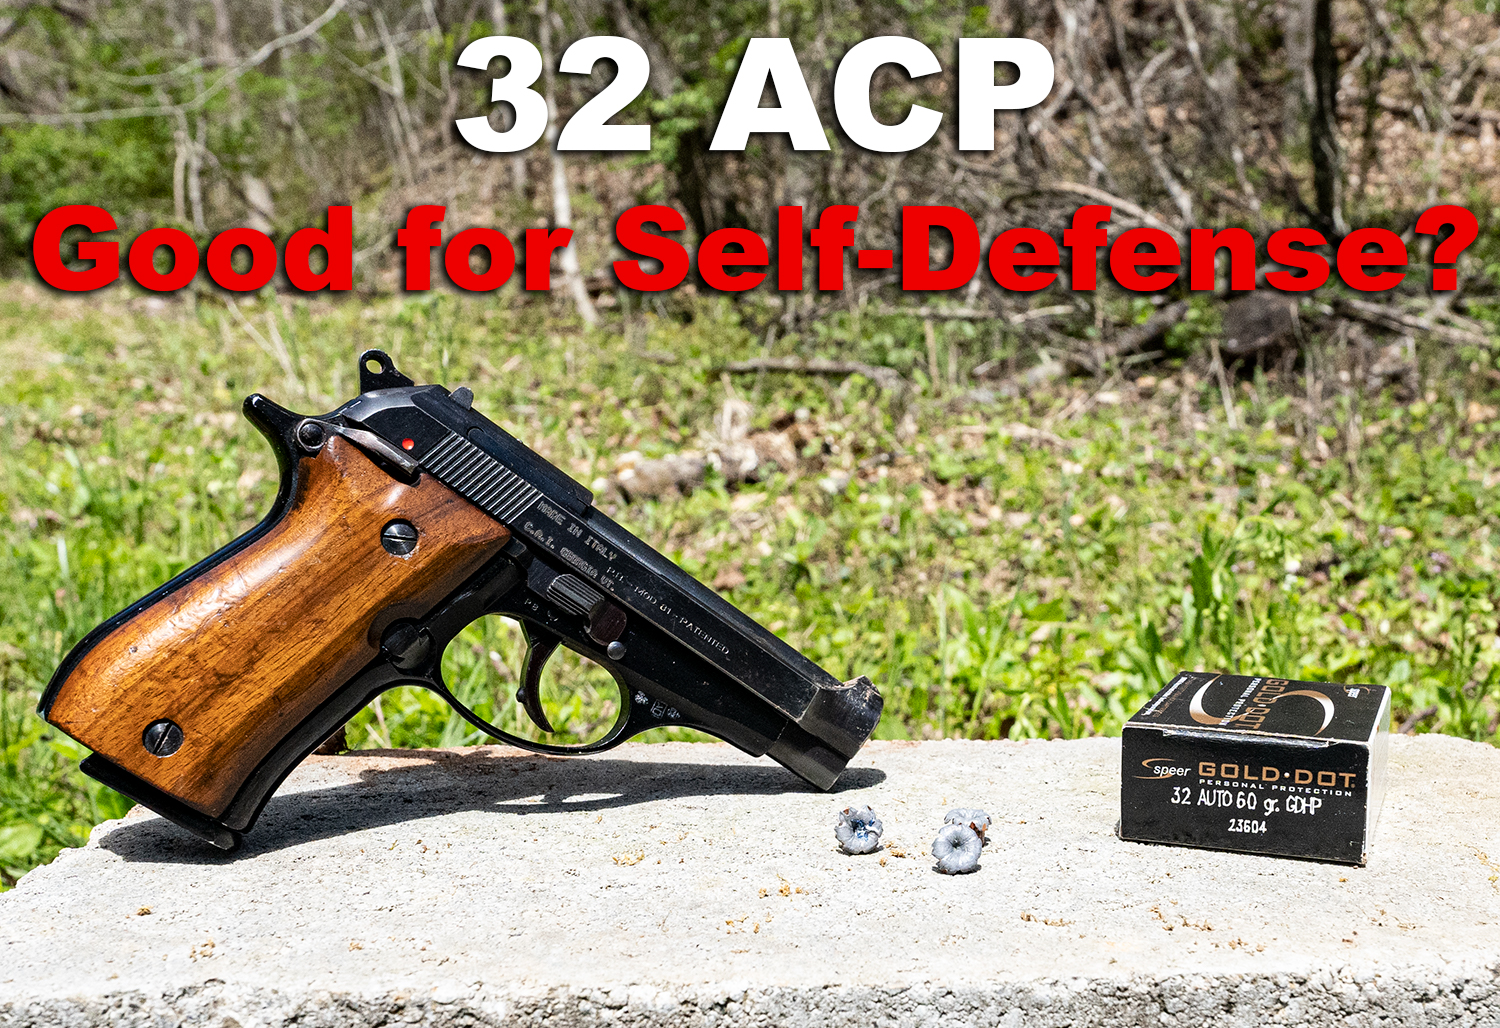 32 ACP for self defense